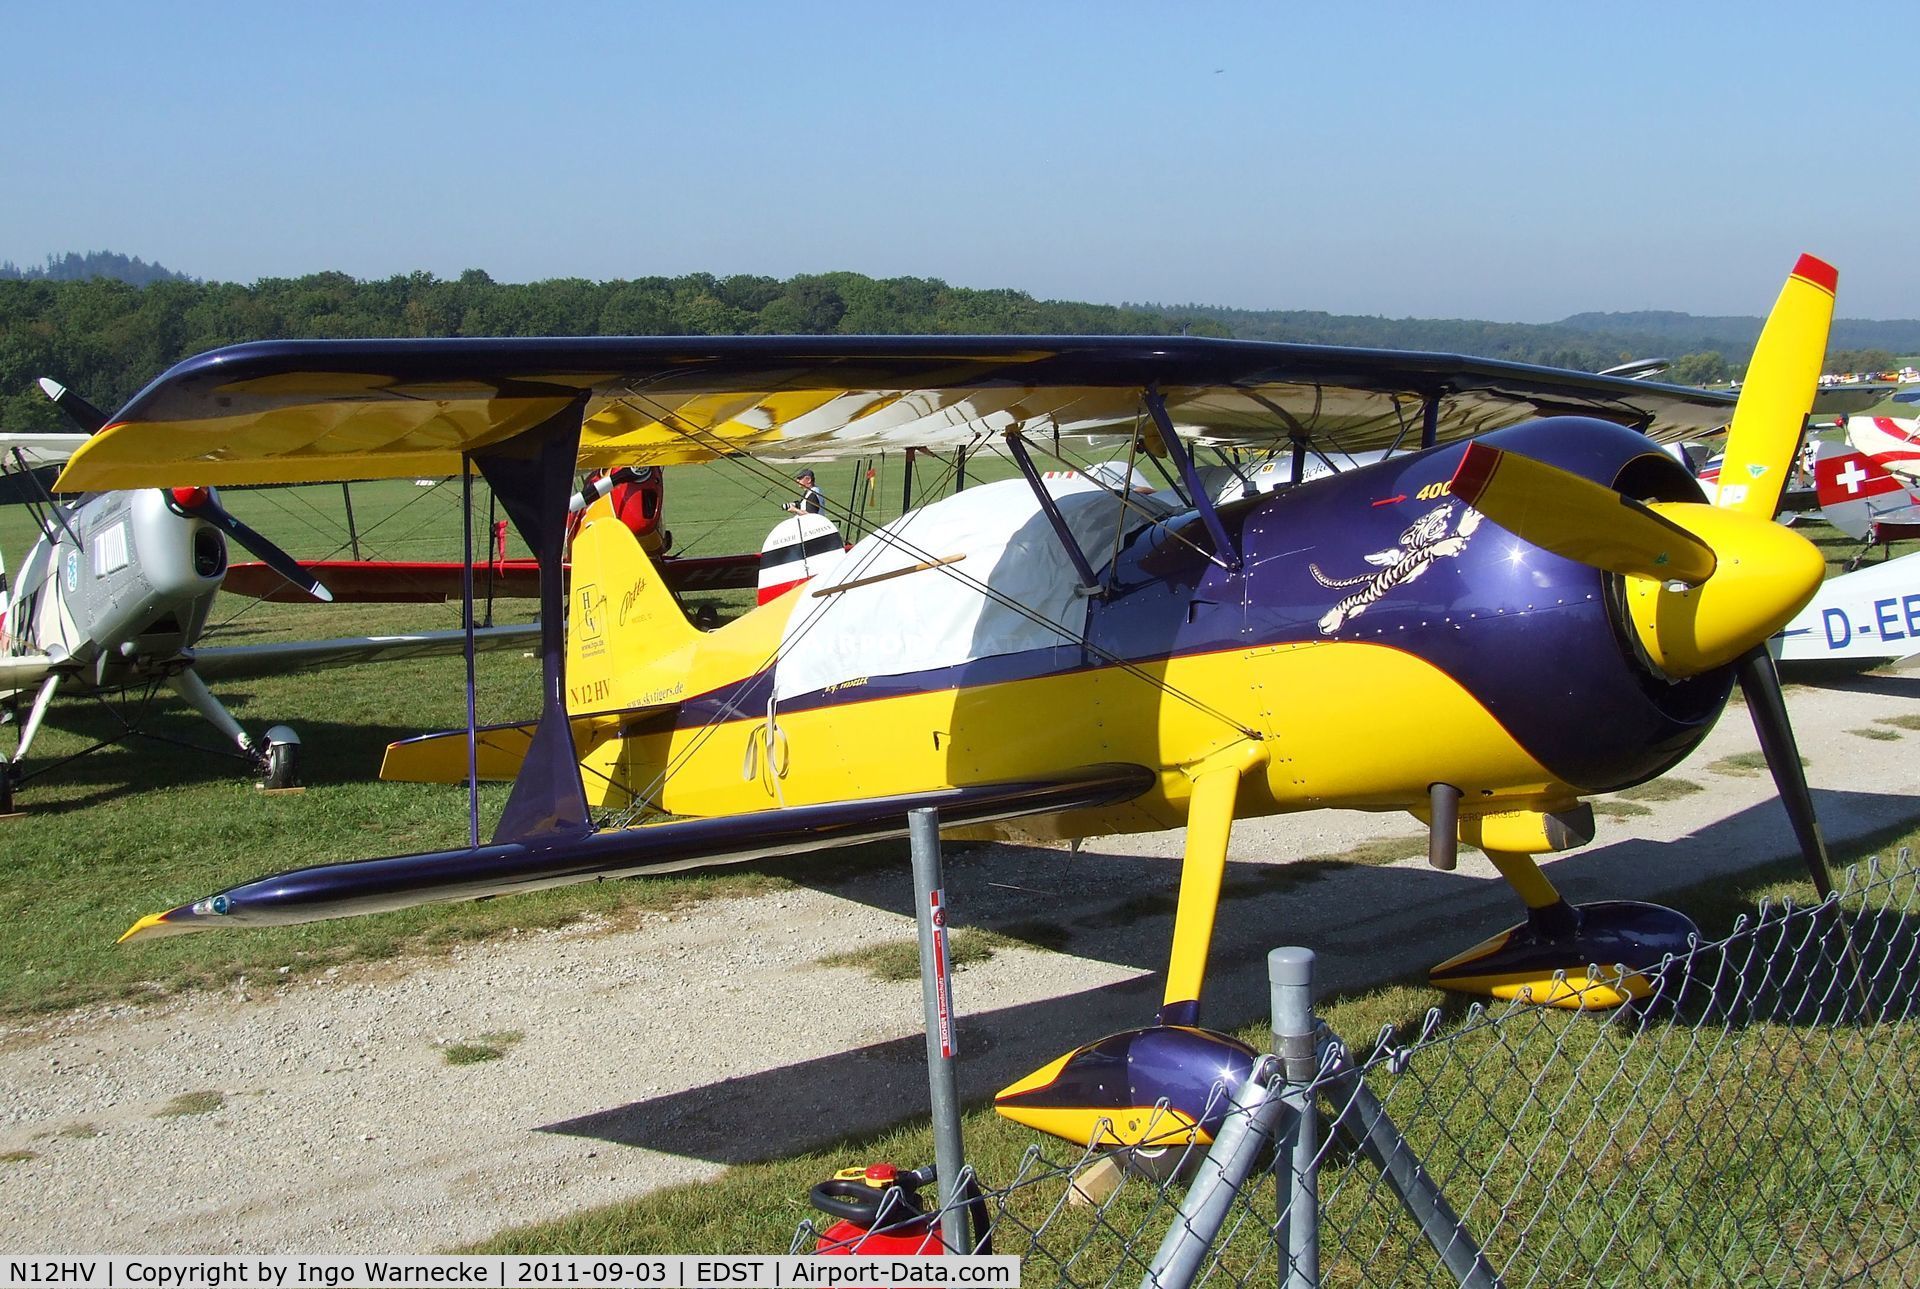 N12HV, 2002 Pitts Model 12 C/N 109, R H W Pitts Mod 12 at the 2011 Hahnweide Fly-in, Kirchheim unter Teck airfield